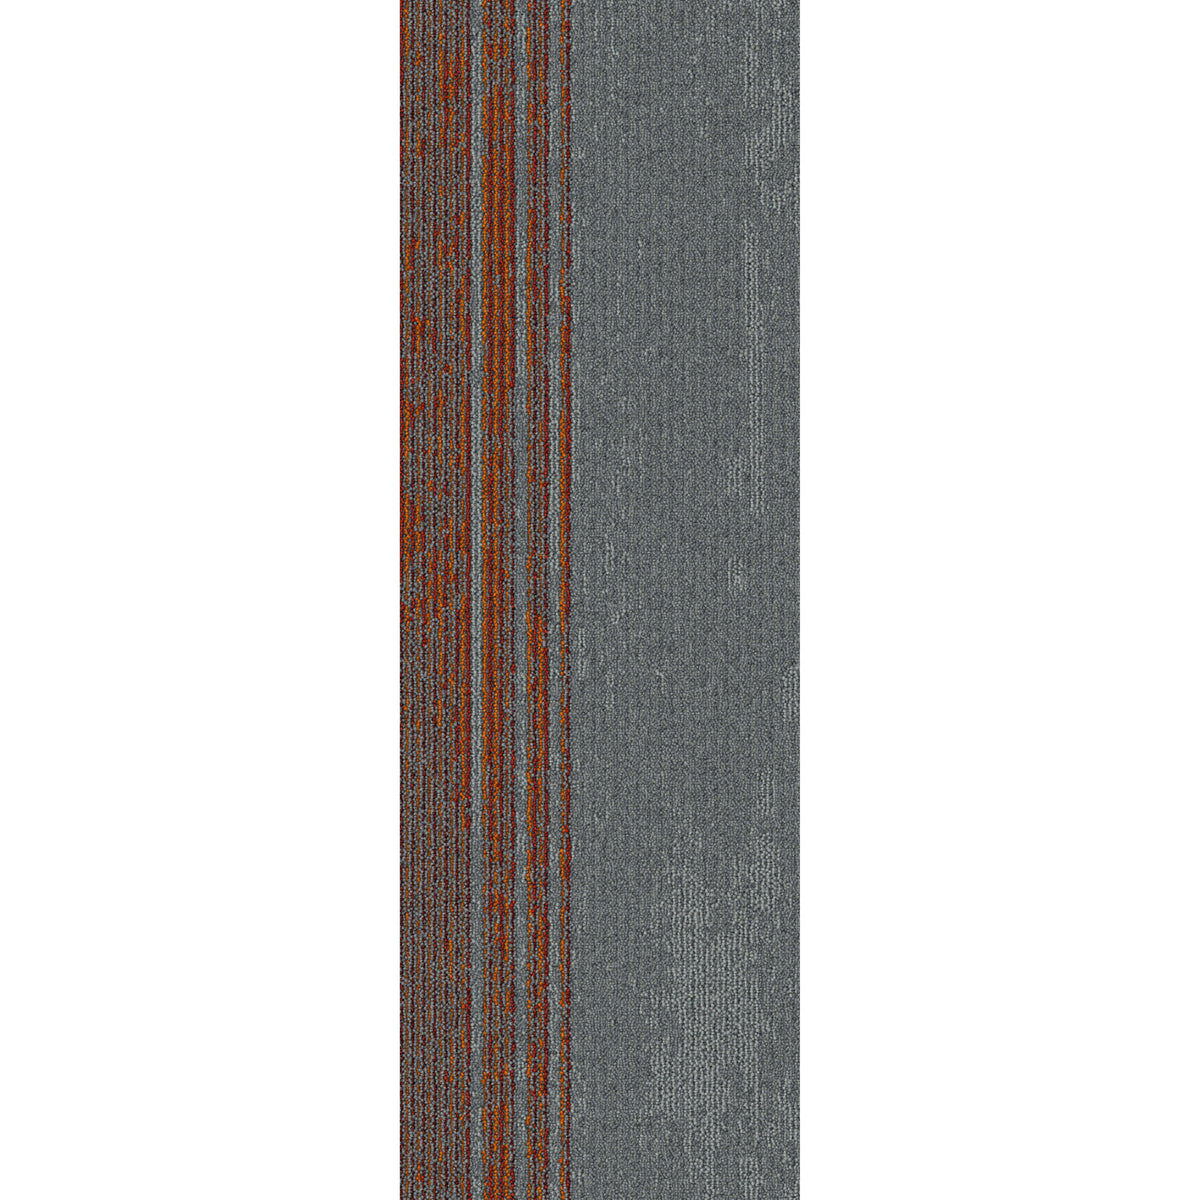 Mohawk Group - Art Style - Disruptive Path - Carpet Tile - Orange Crush